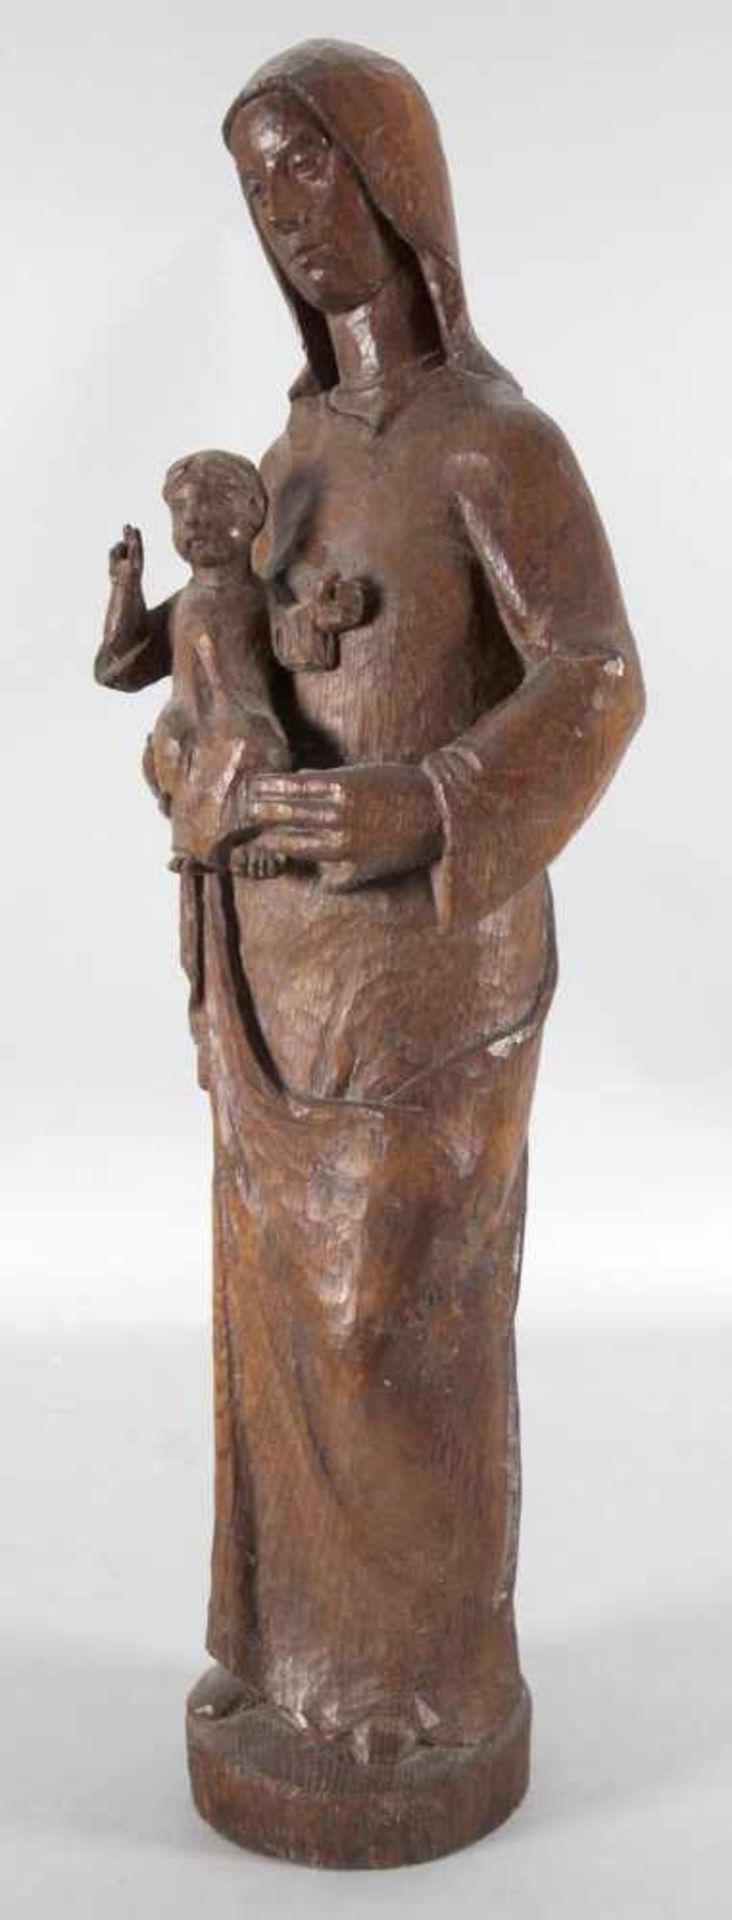 Pieta, Mitte 20. Jh., wohl ItalienNussholz beschnitzt, naturbelassen, H: 62 cm, - Schätzpreis: 380,-